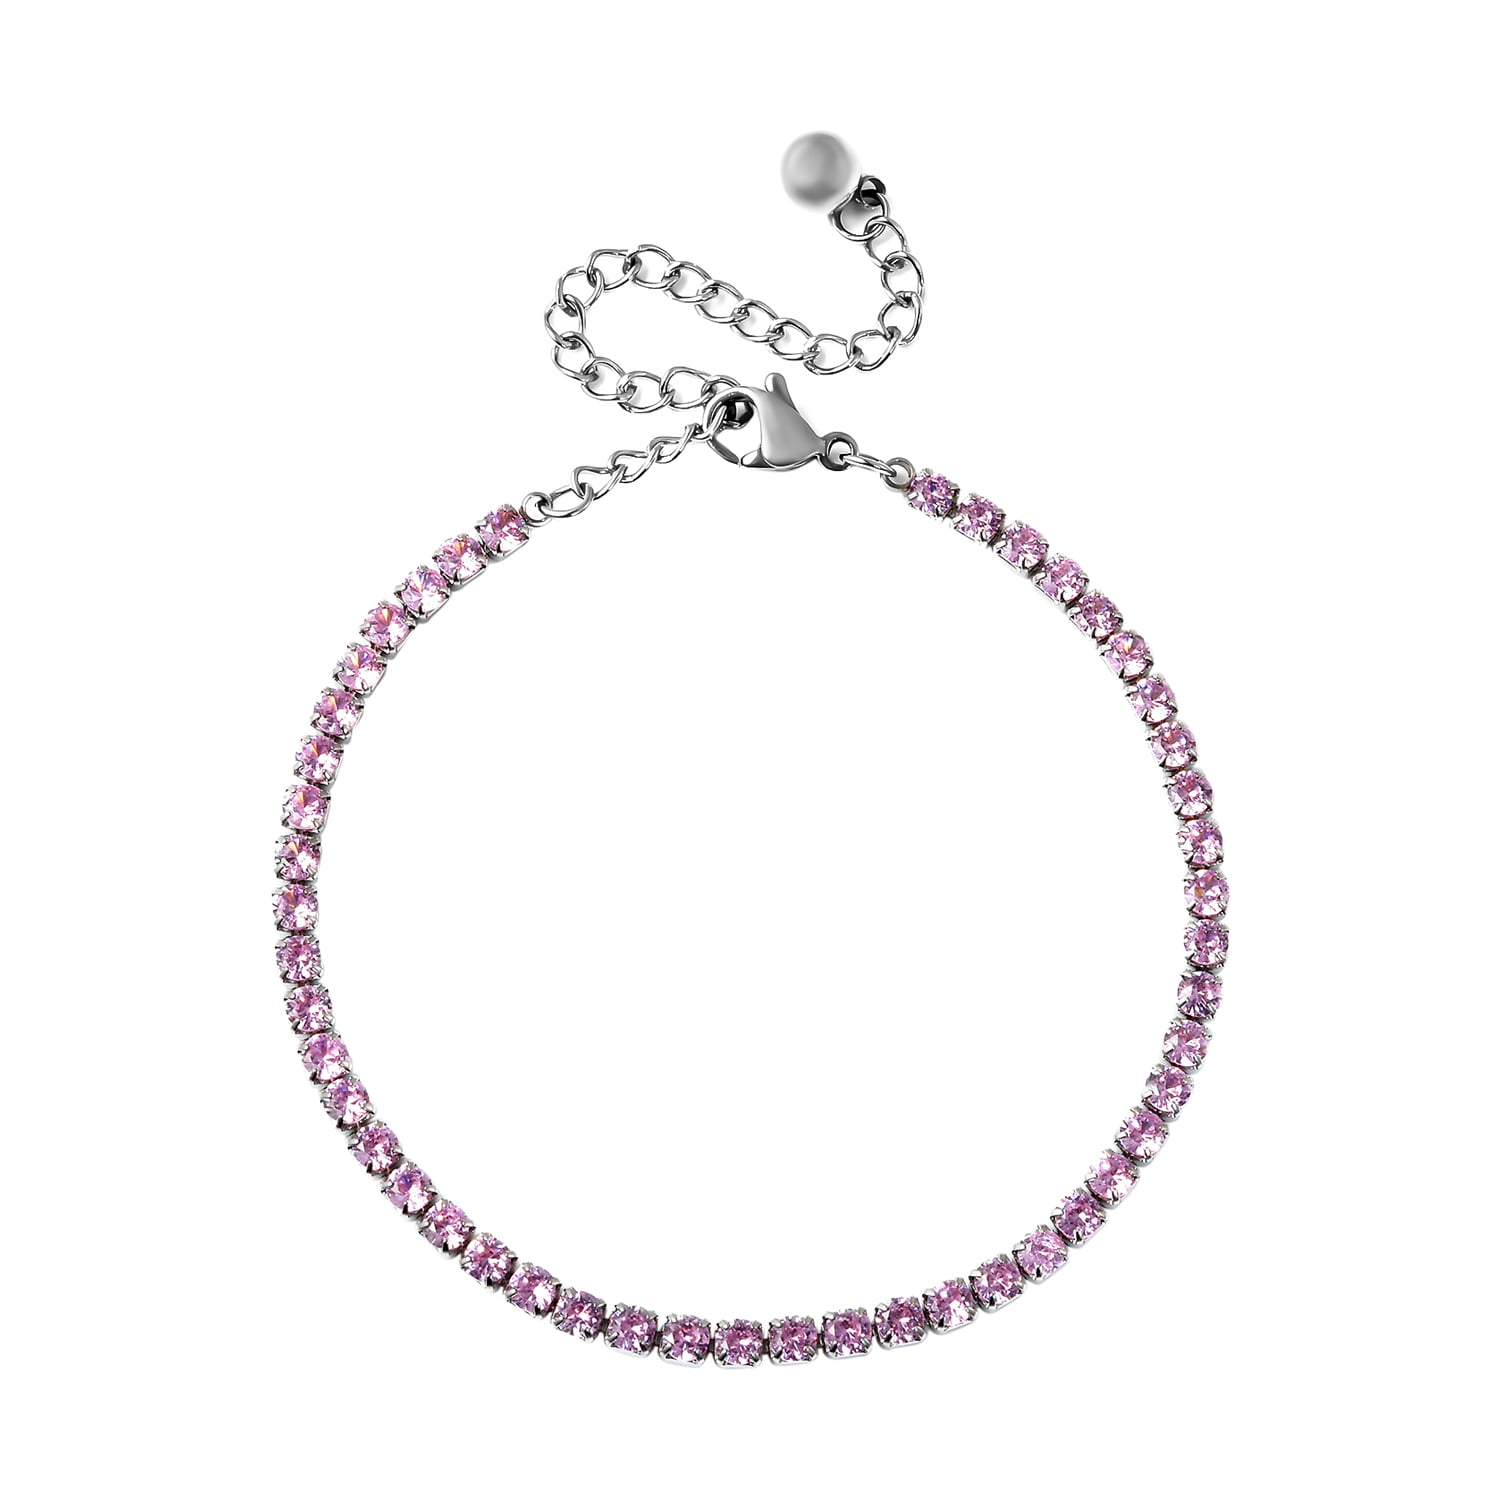 Halo Tennis Chain Bracelet Adjustable Sterling Silver Pink CZ 